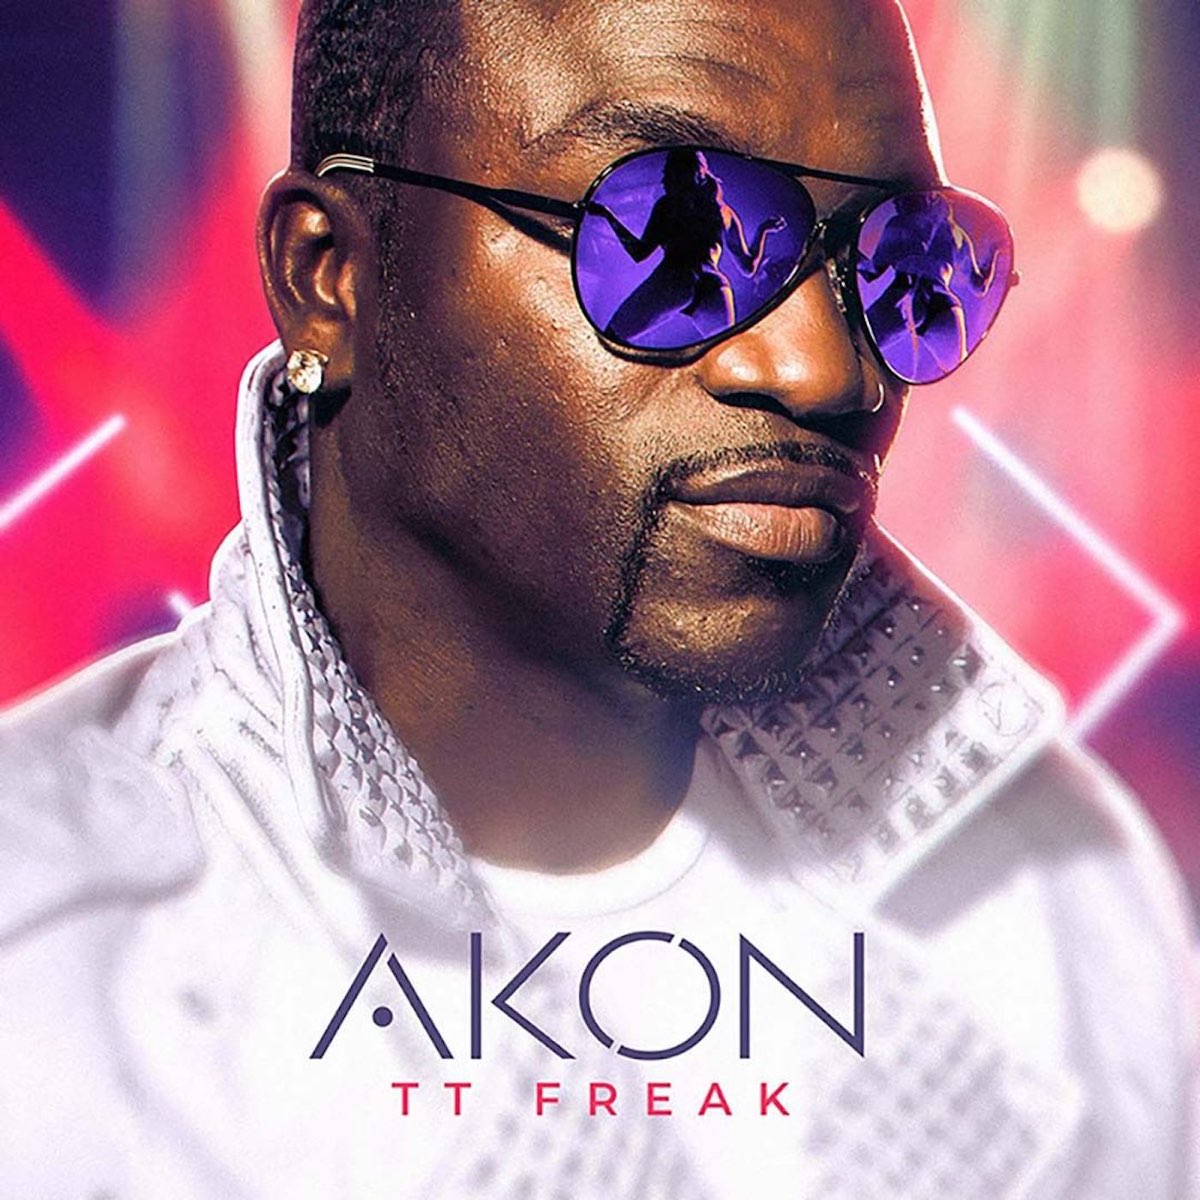 TT Freak by Akon on Apple Music